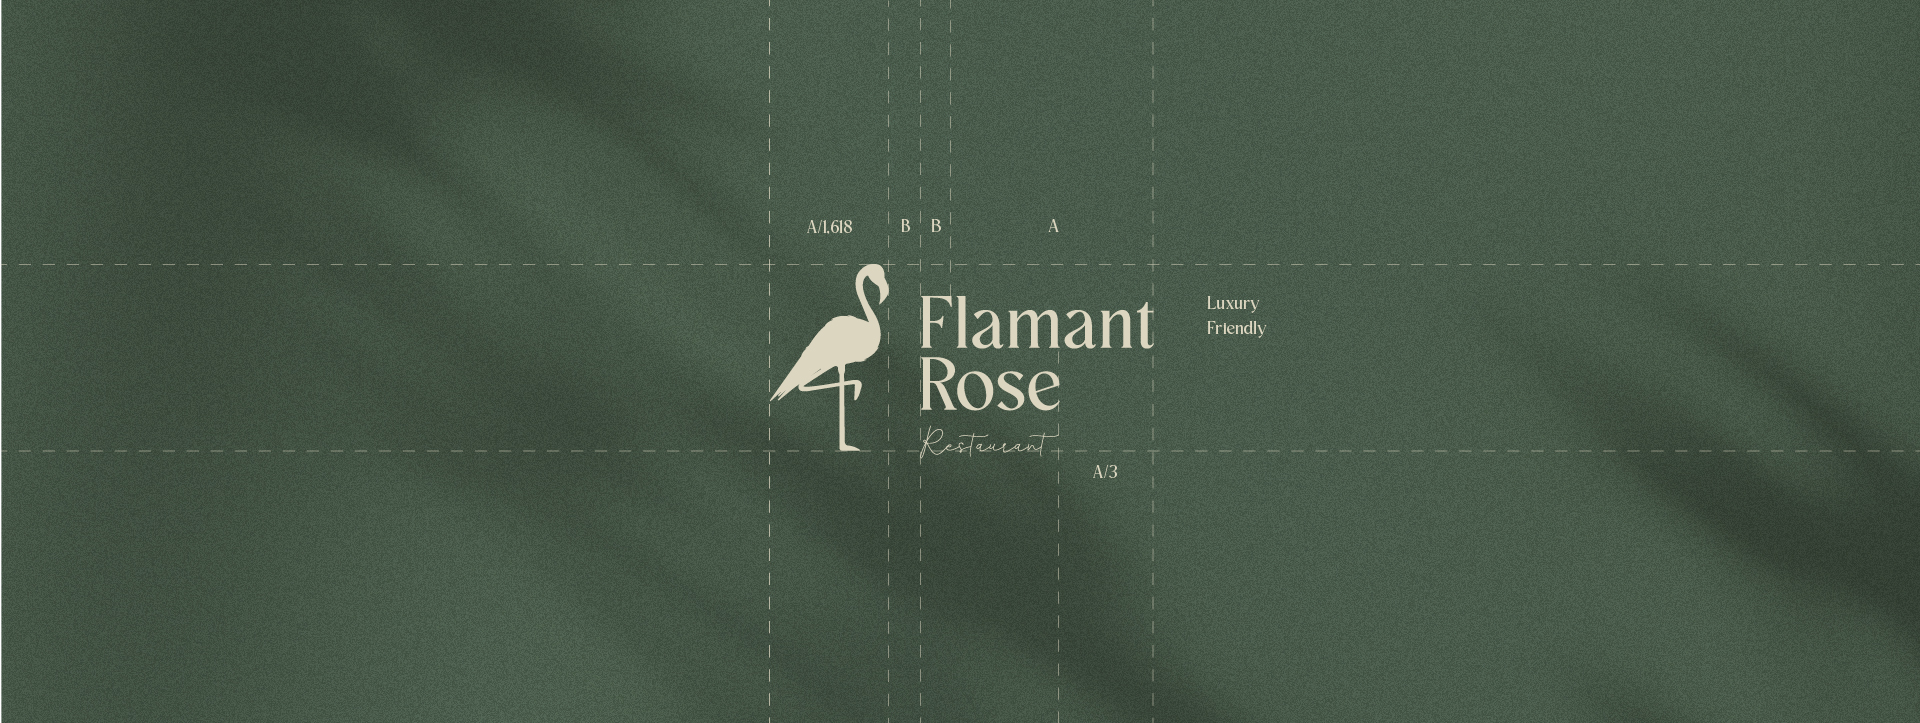 Le Flamant Rose Restaurant Branding by Oussama El Akel